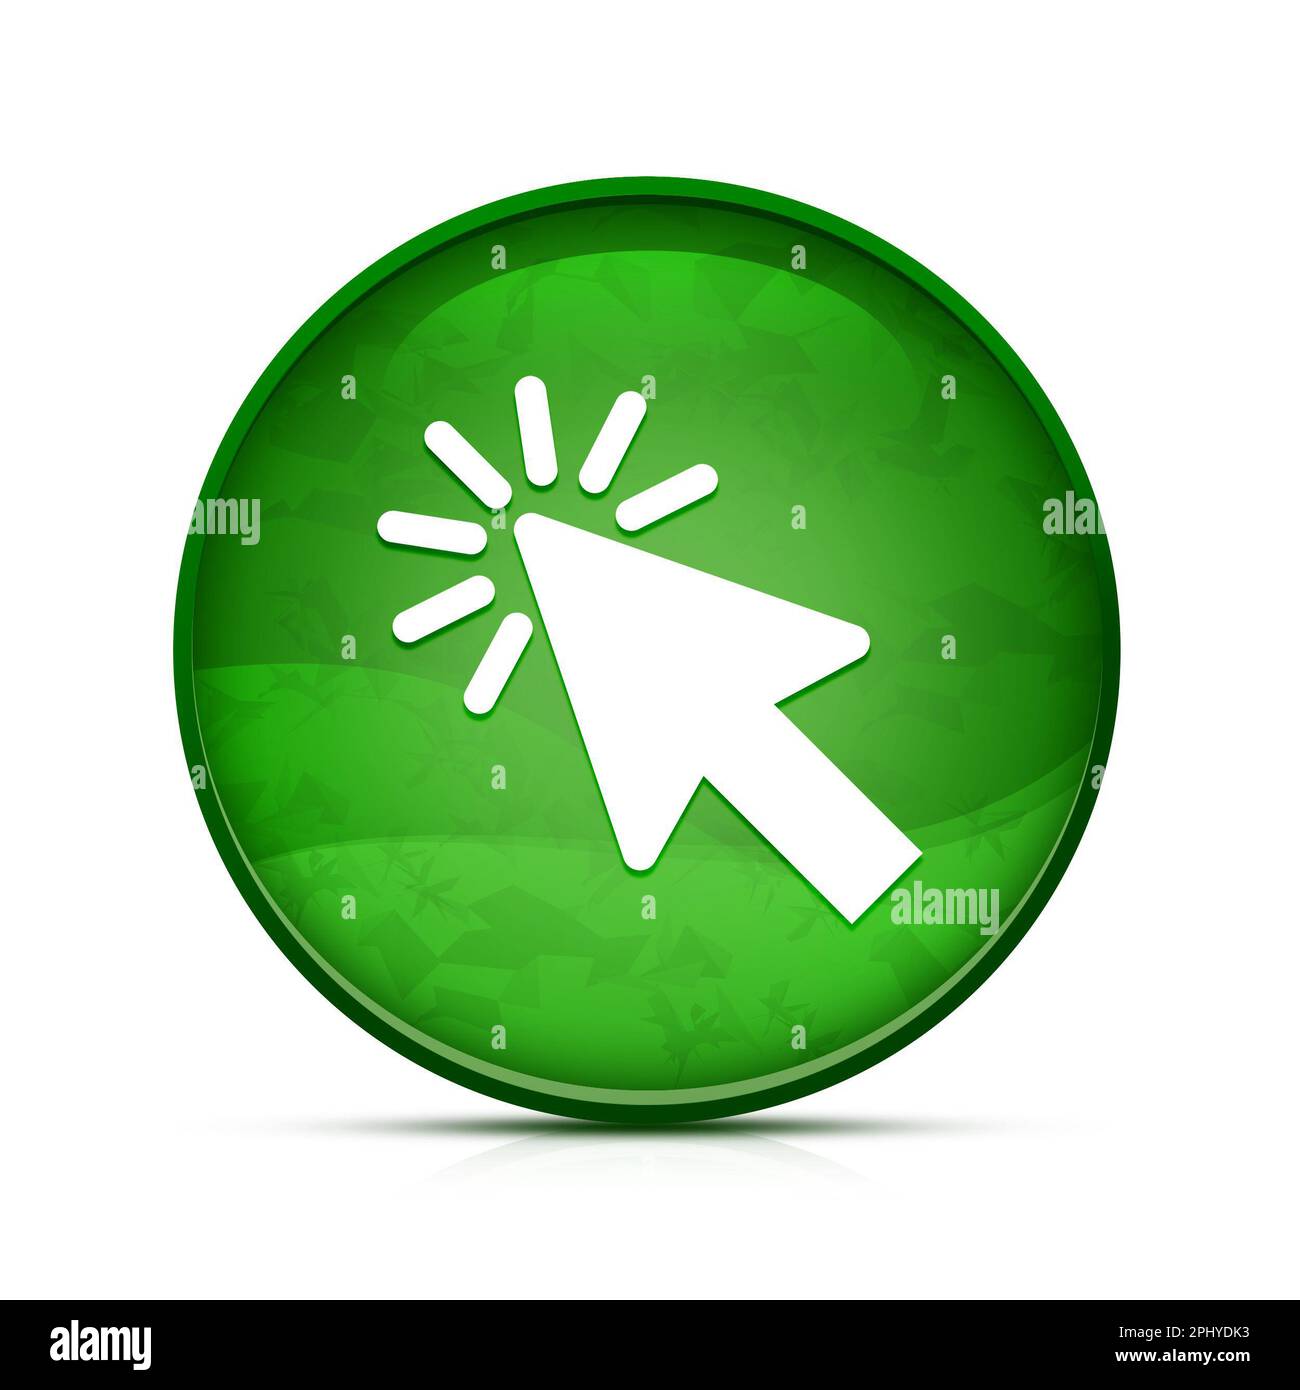 search button icon green